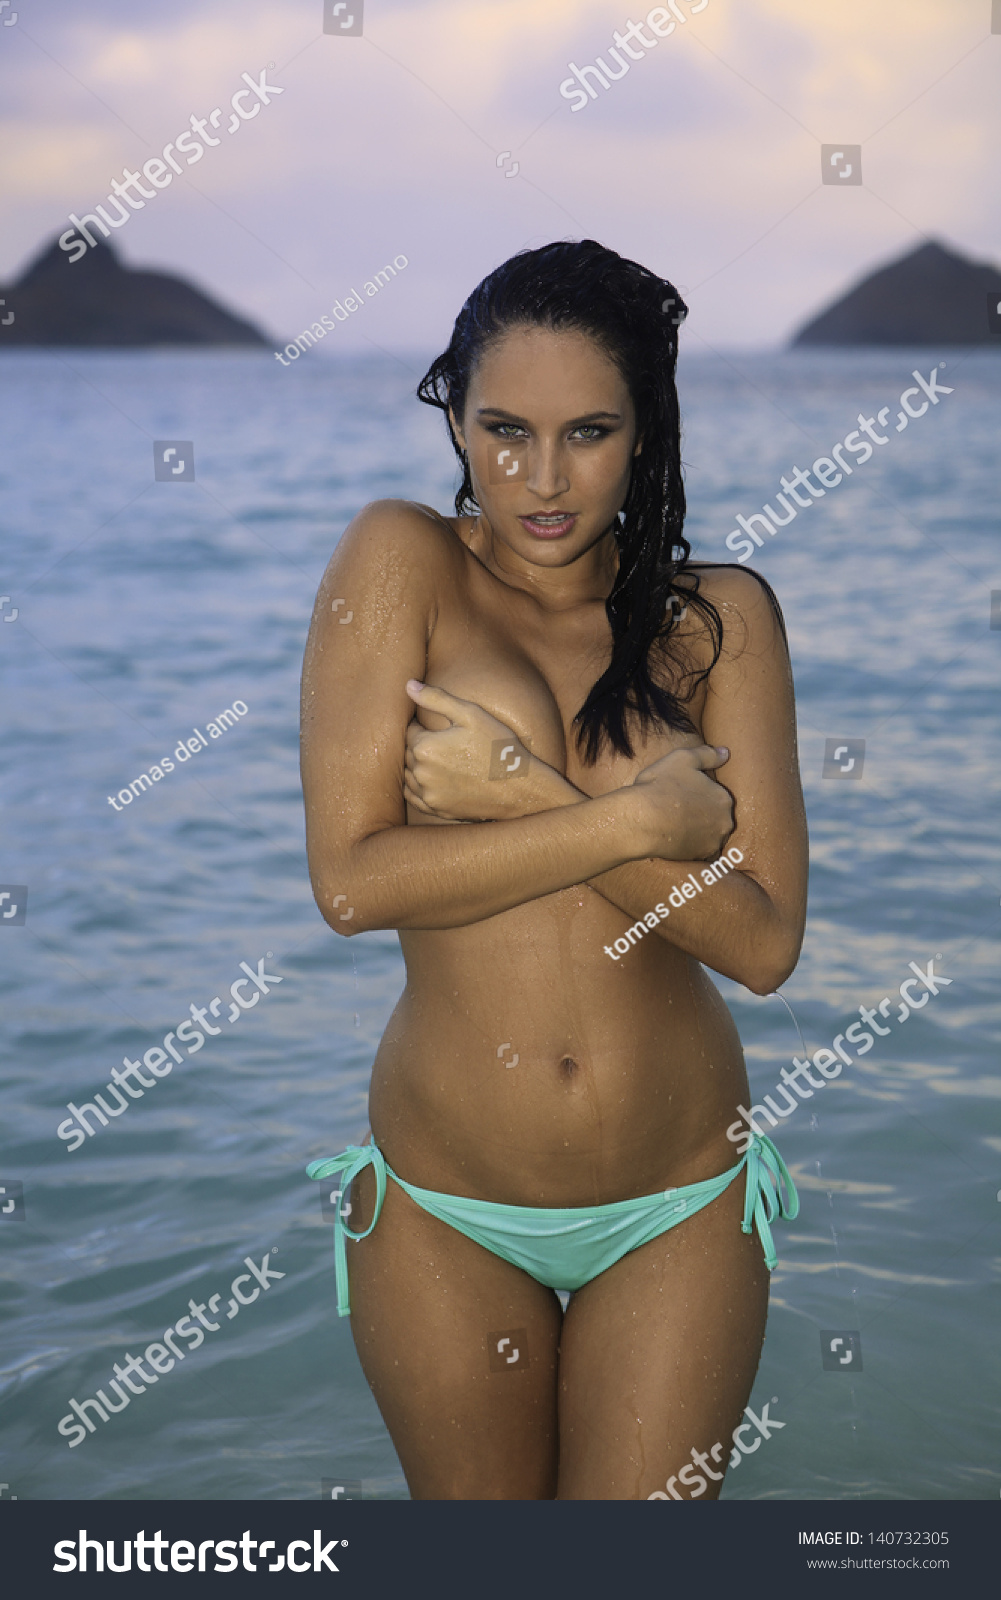 Naked girls by the beach Beautiful Topless Girl Bikini On Beach Stock Photo Edit Now 140732305